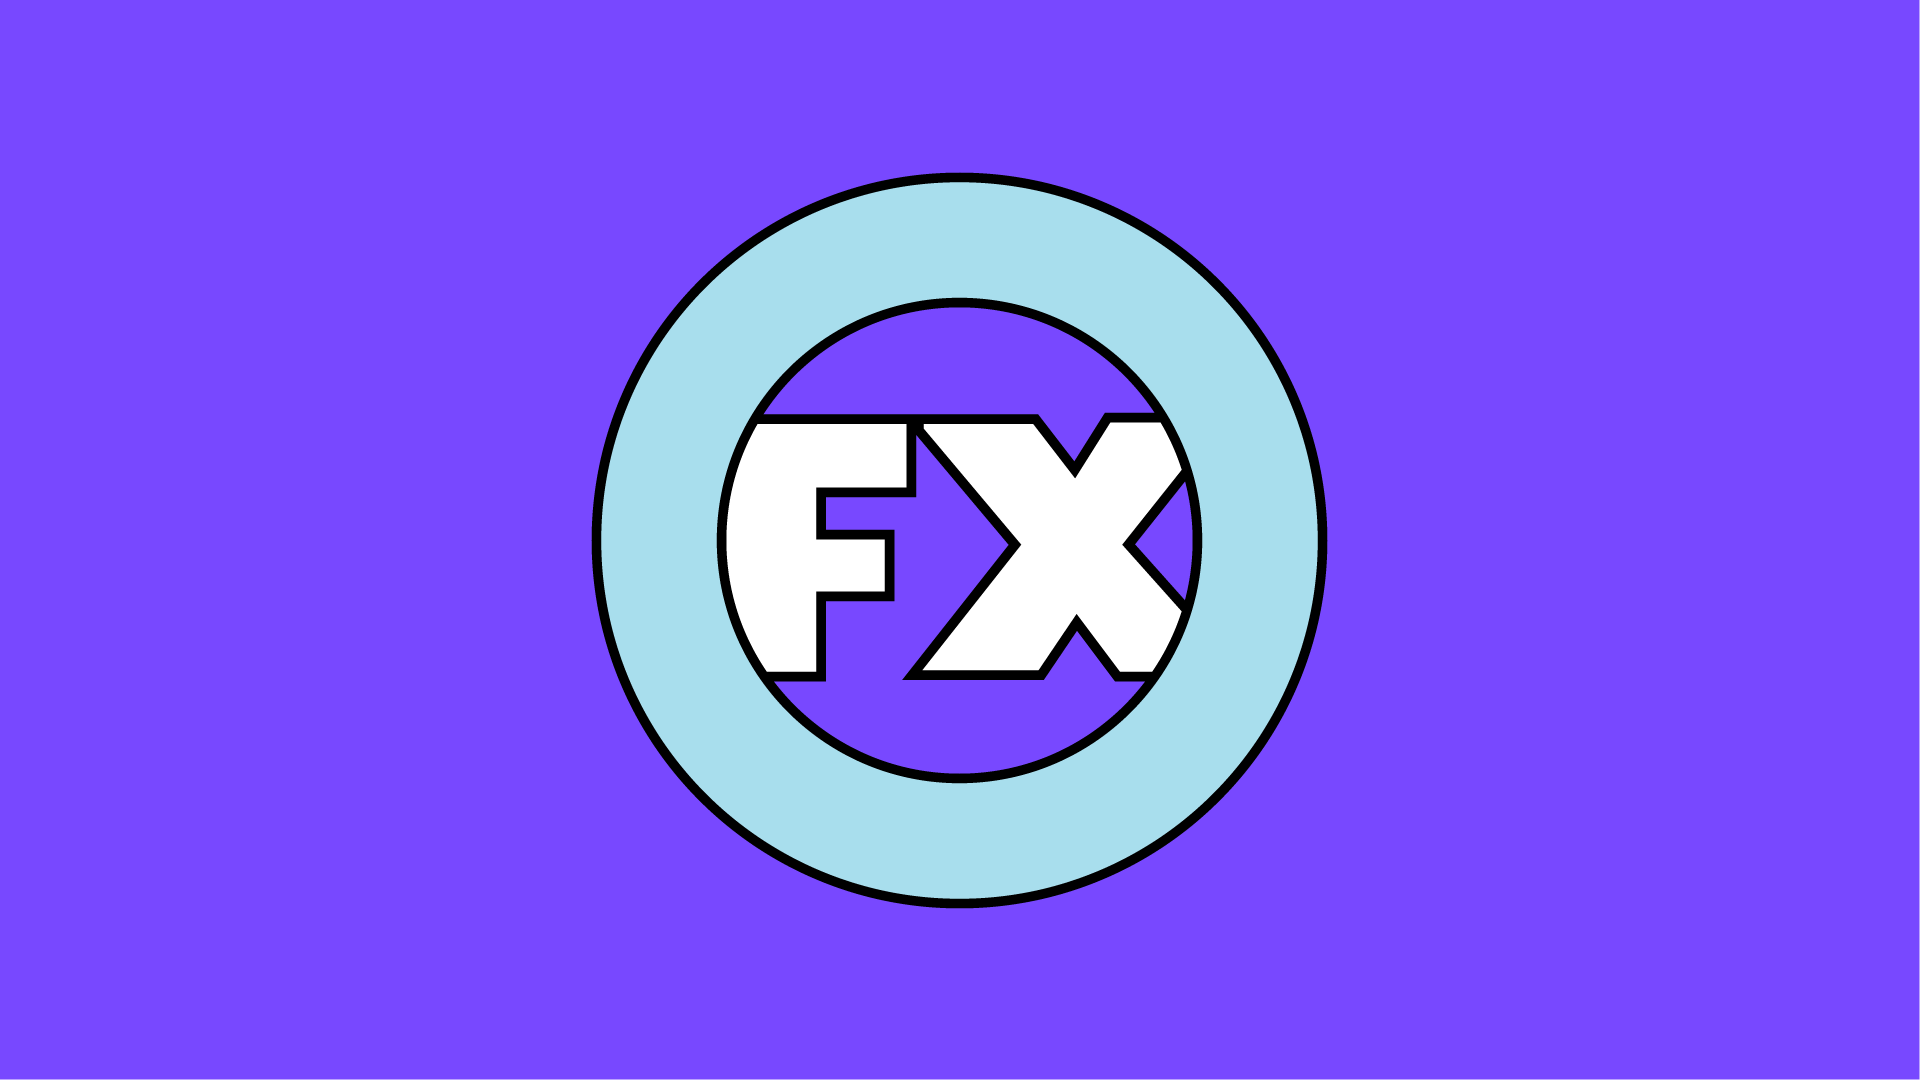 OpenFX Association logo